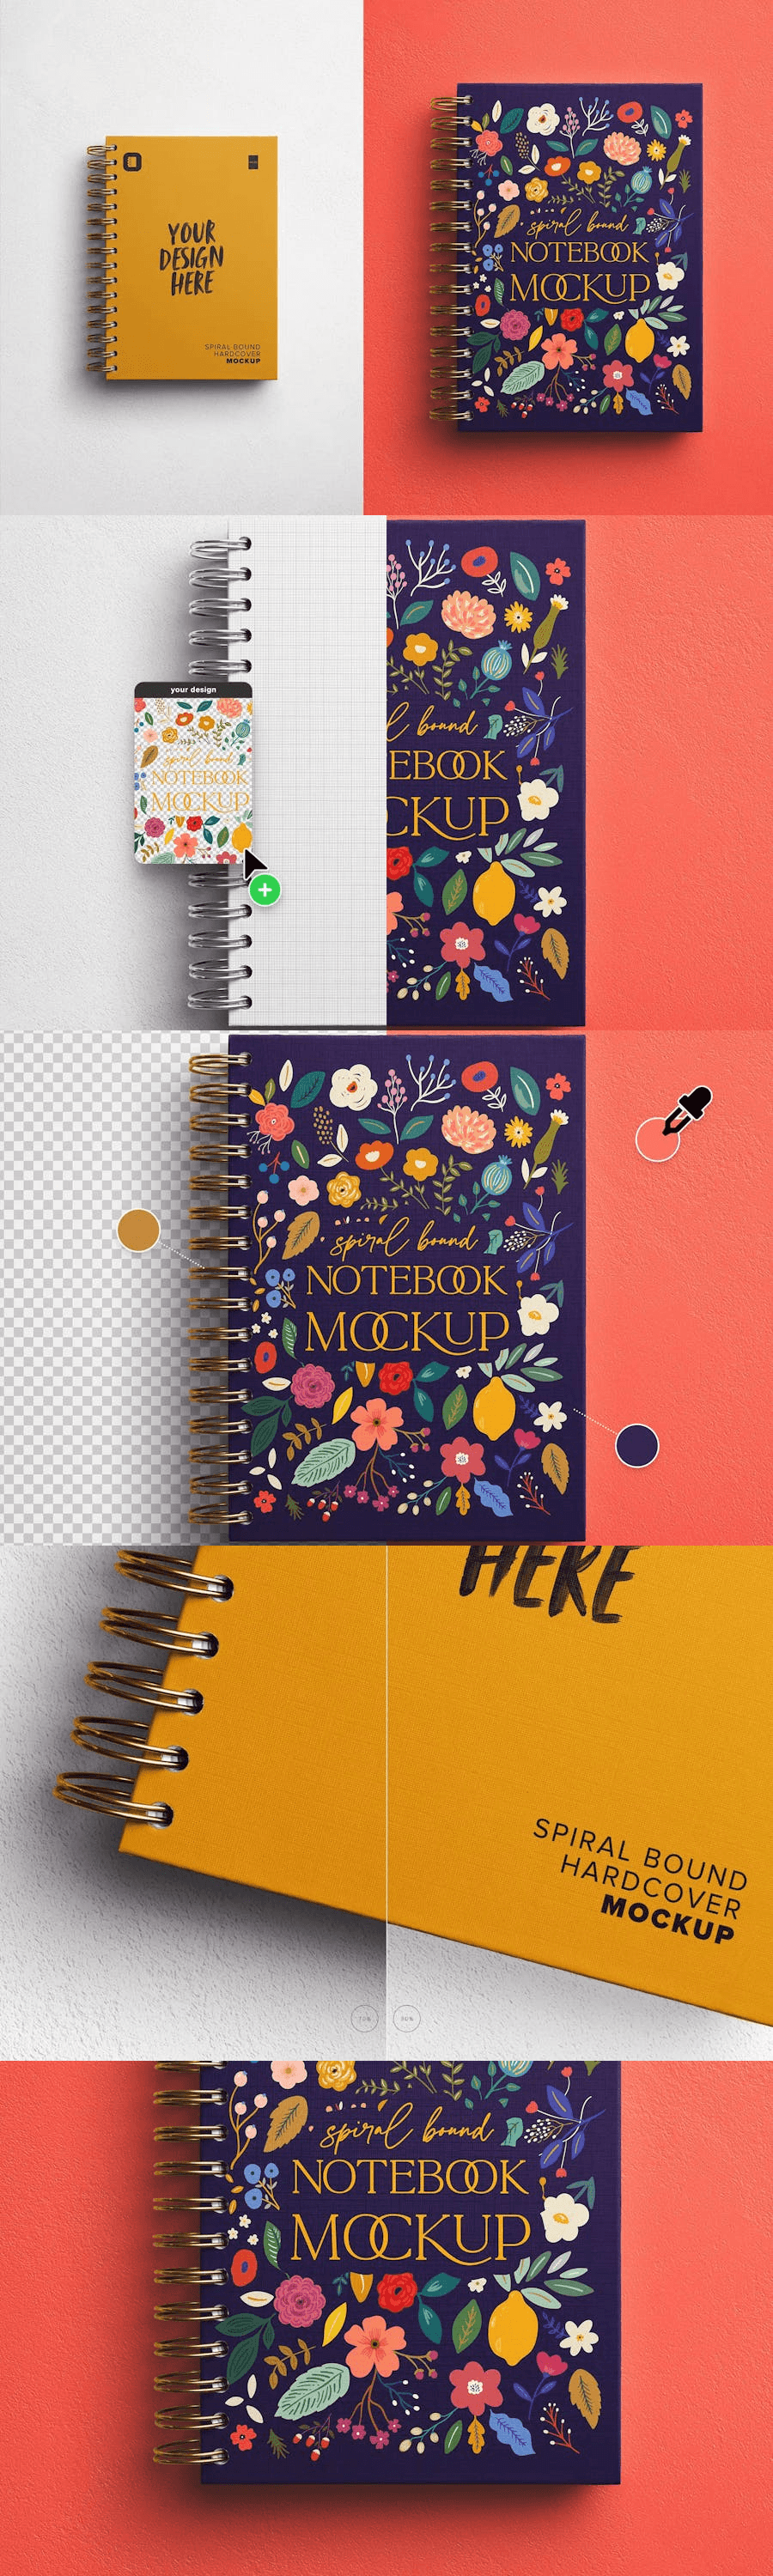 notebook Mockup book book cover book design books Booklet editorial InDesign magazine